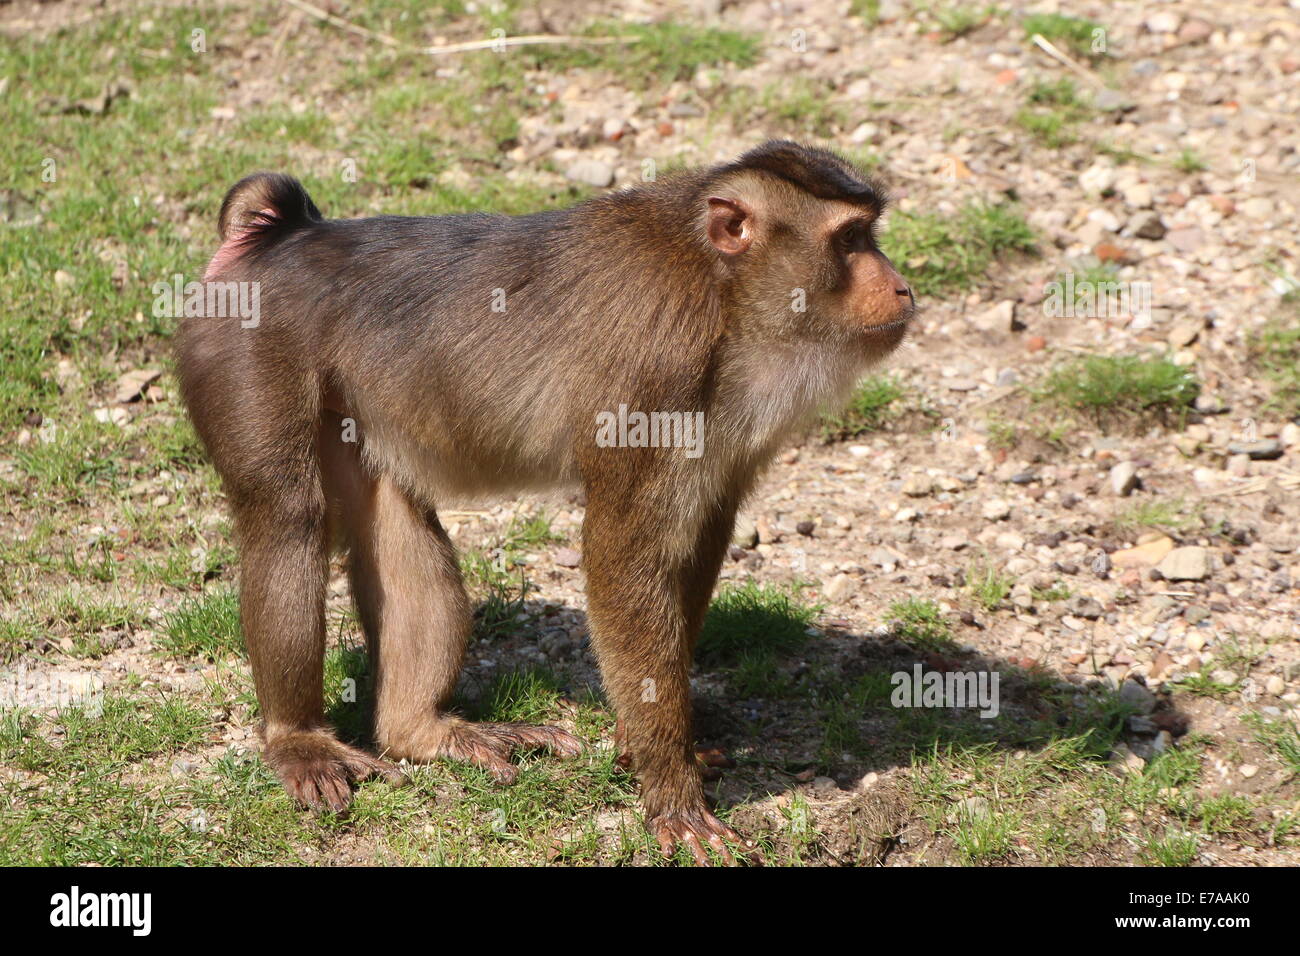 Macaco cola de cerdo sureño hi-res stock photography and images - Alamy